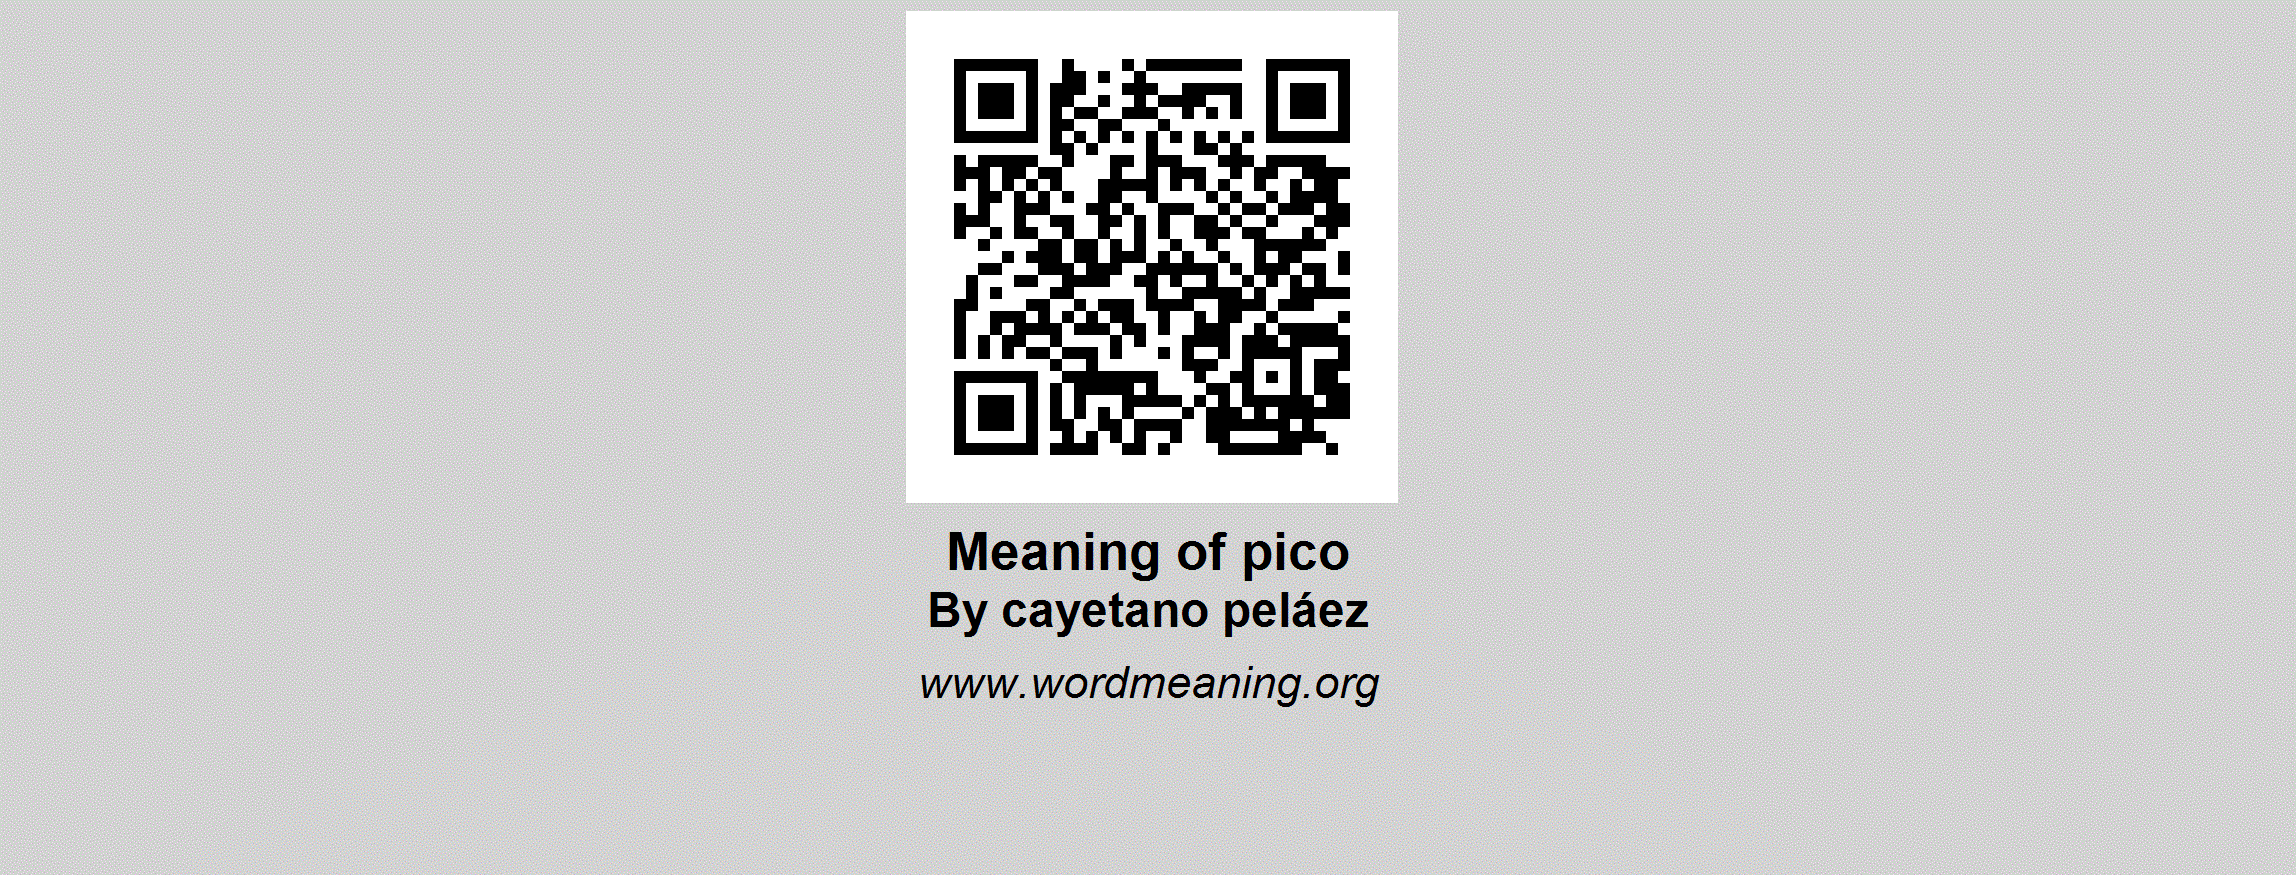 PICO | Meaning of pico by Cayetano Peláez